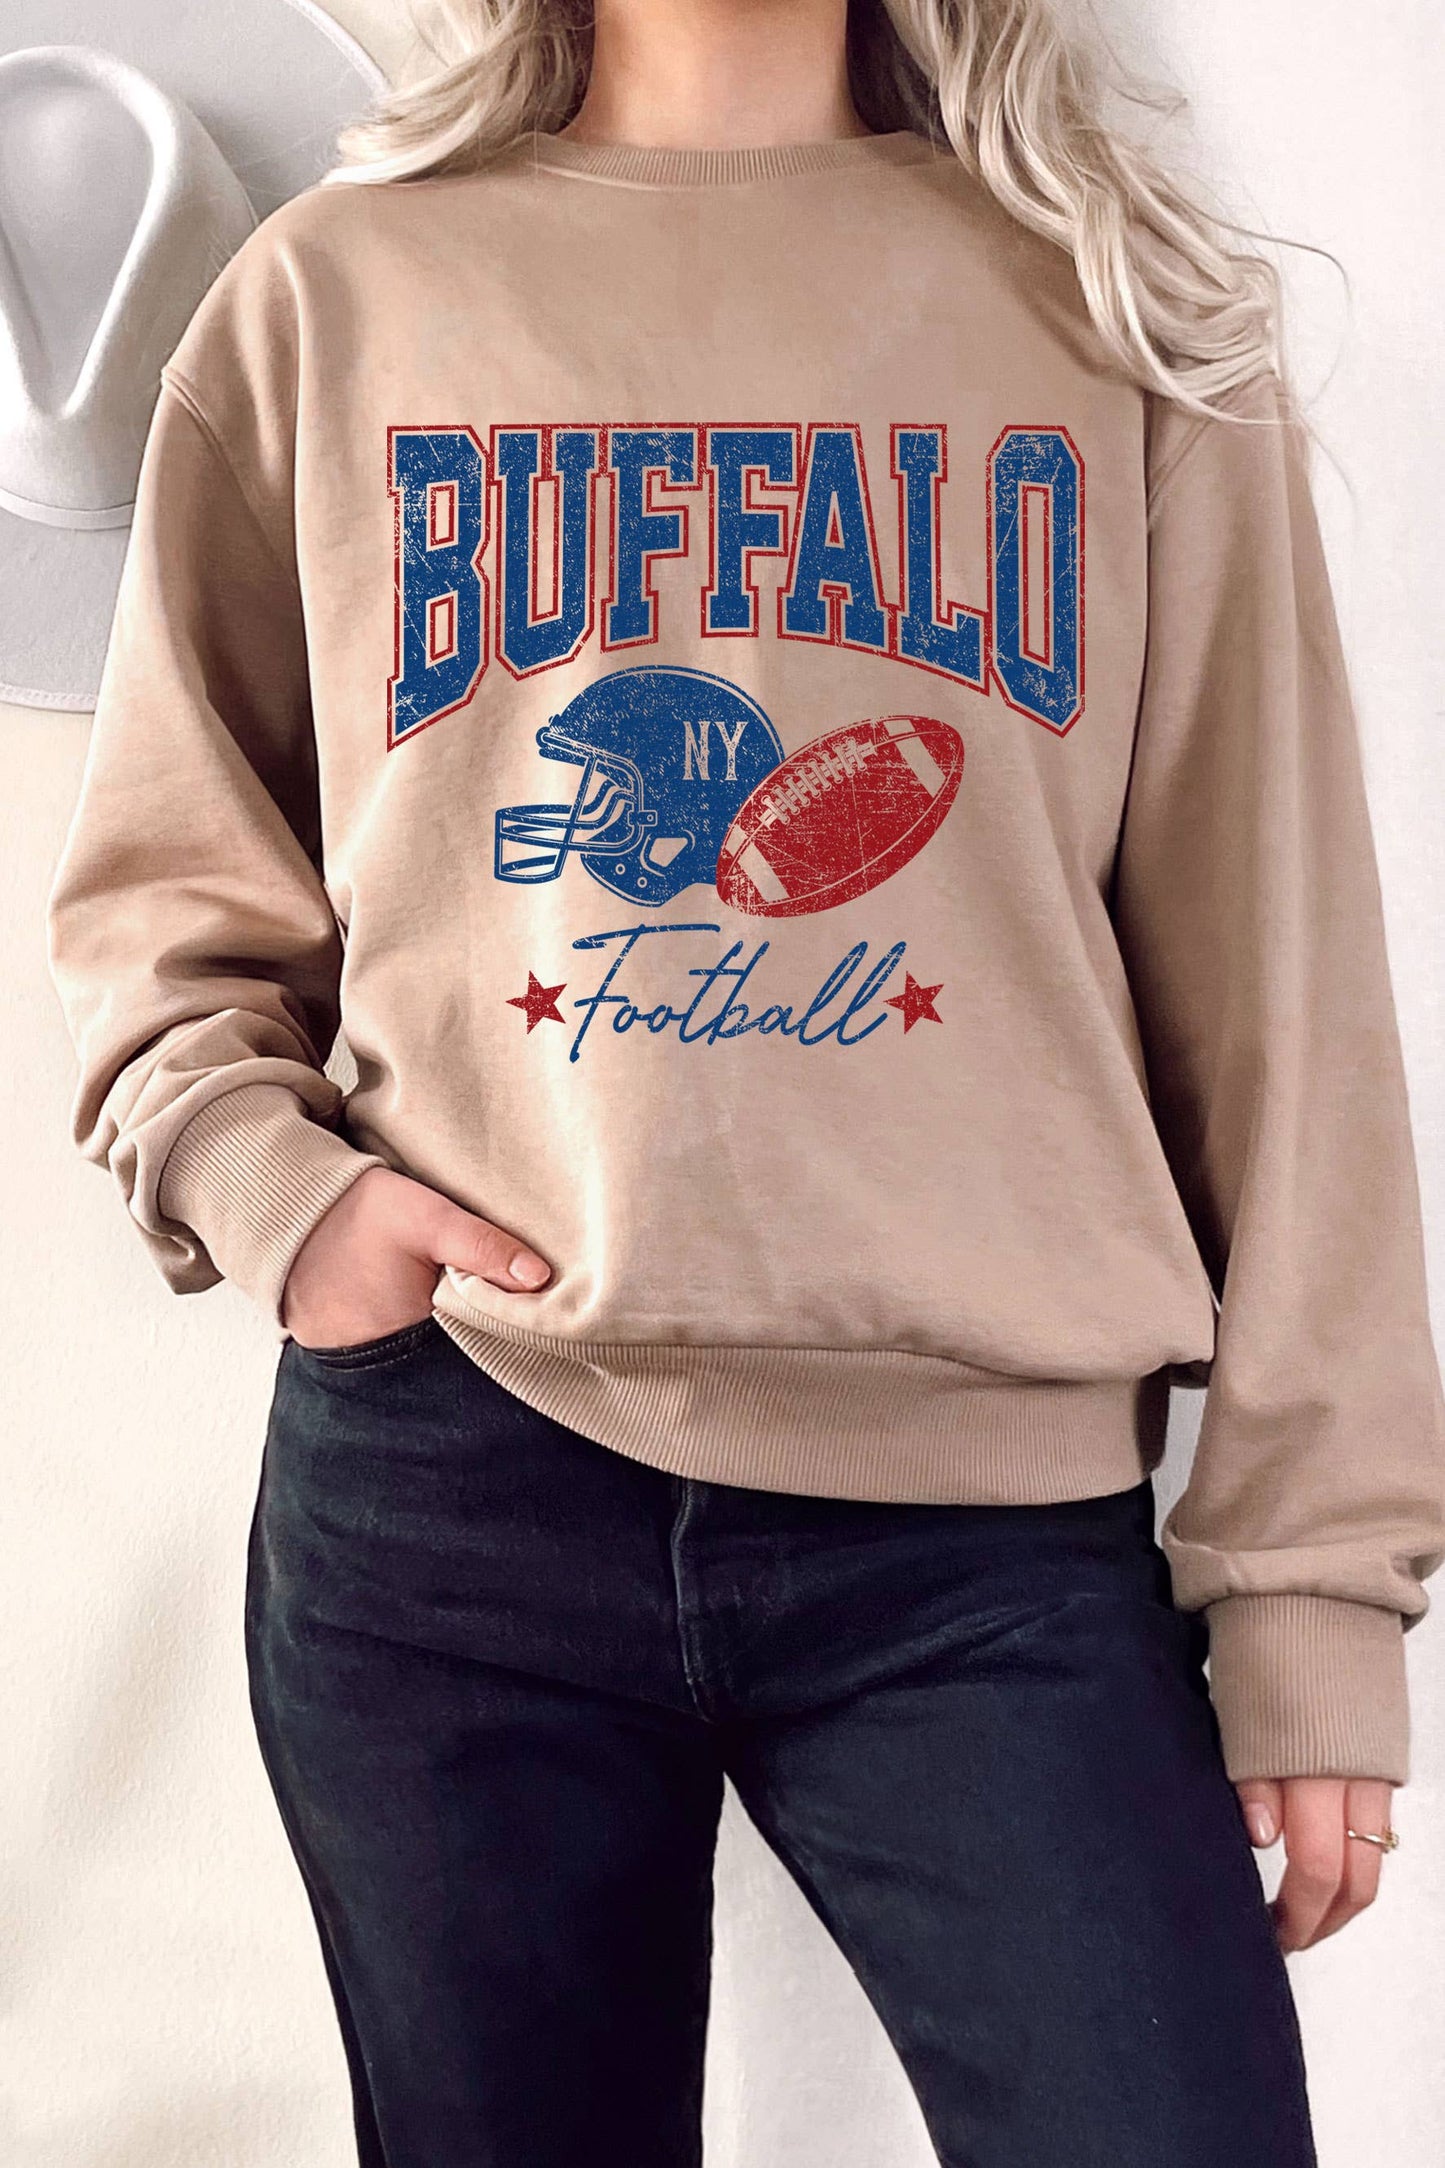 Buffalo fotball terry sweatshirt